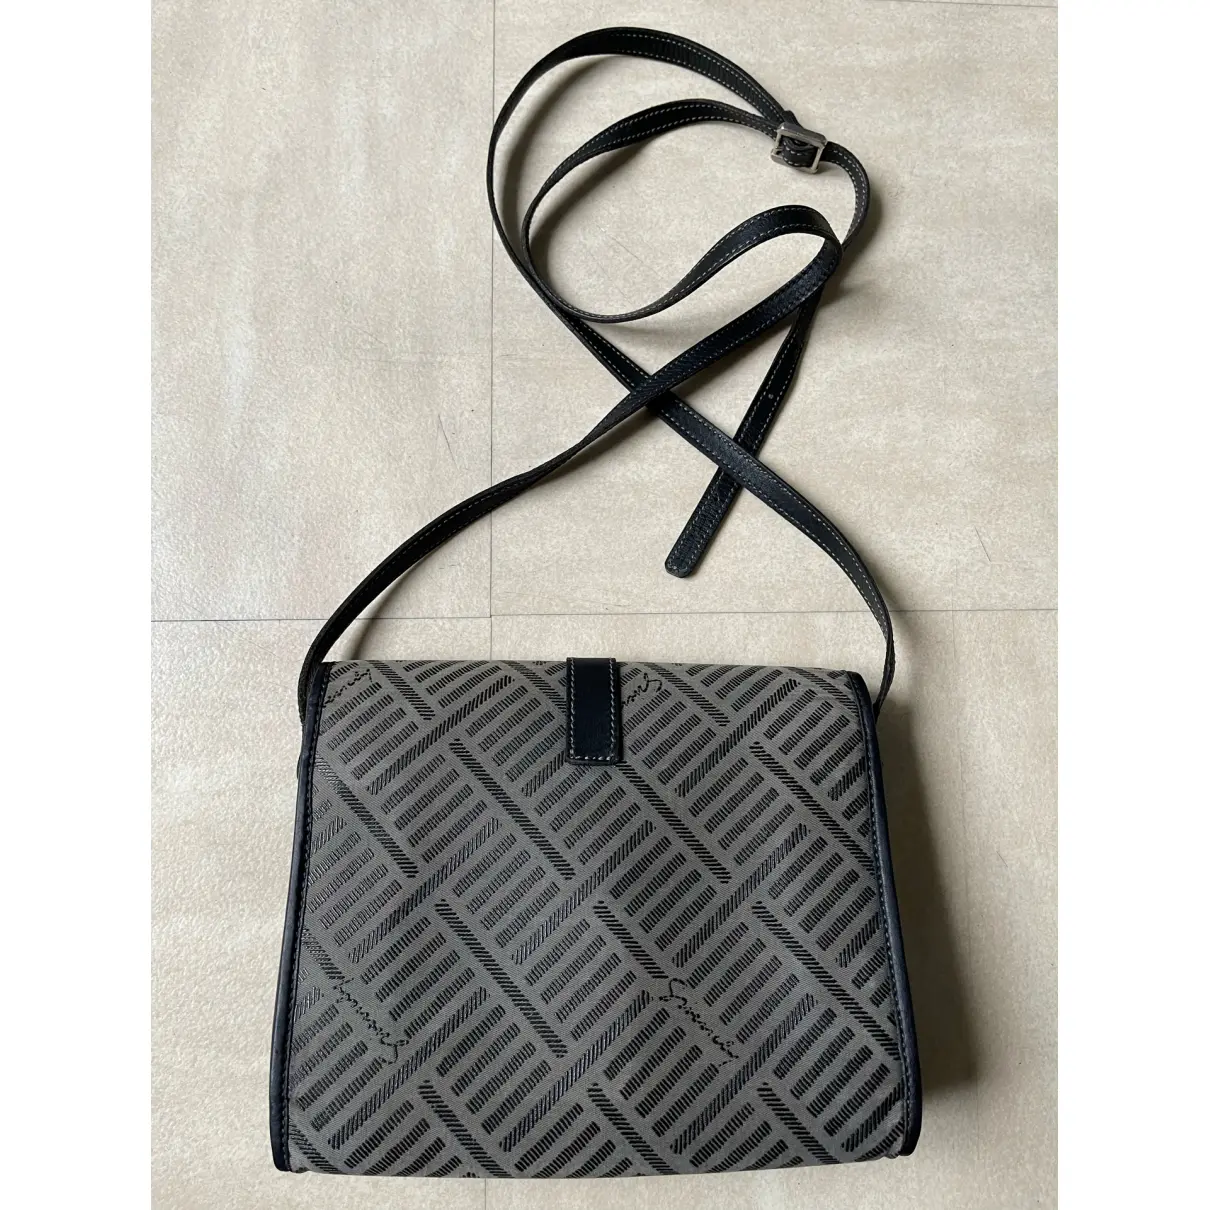 Buy Givenchy Cloth handbag online